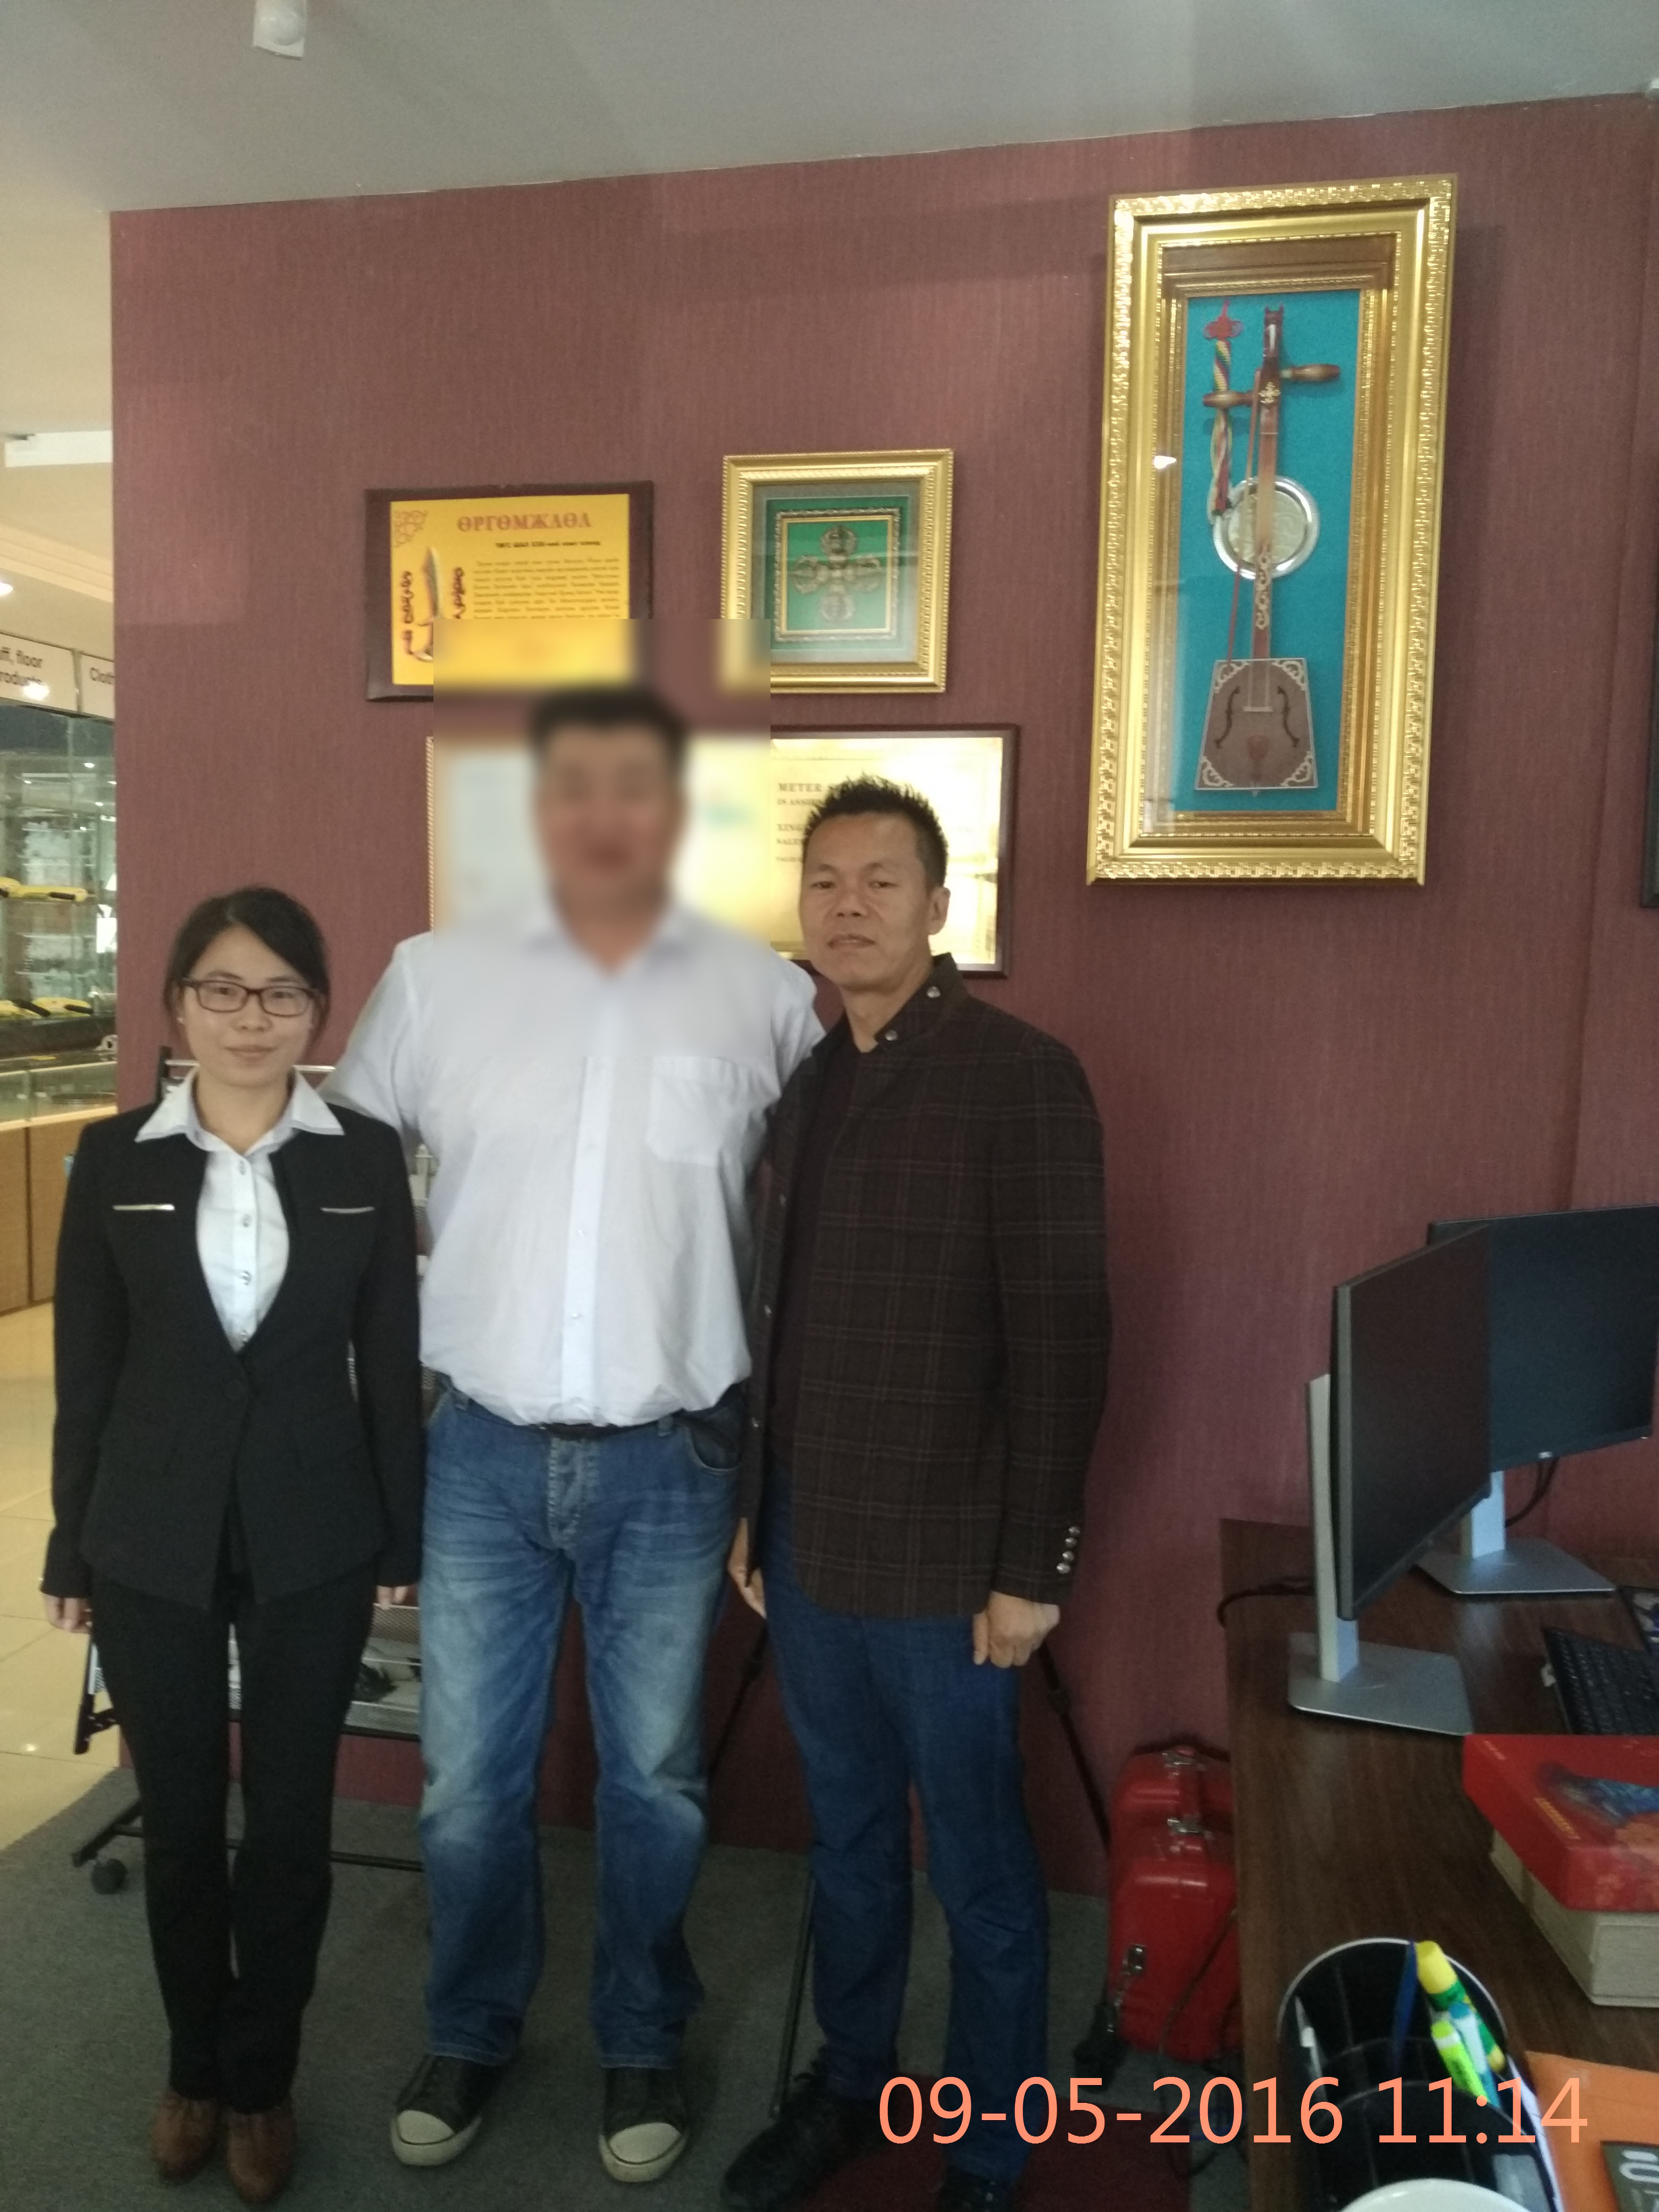 Xaingyi 팀 외부 몽골 방문